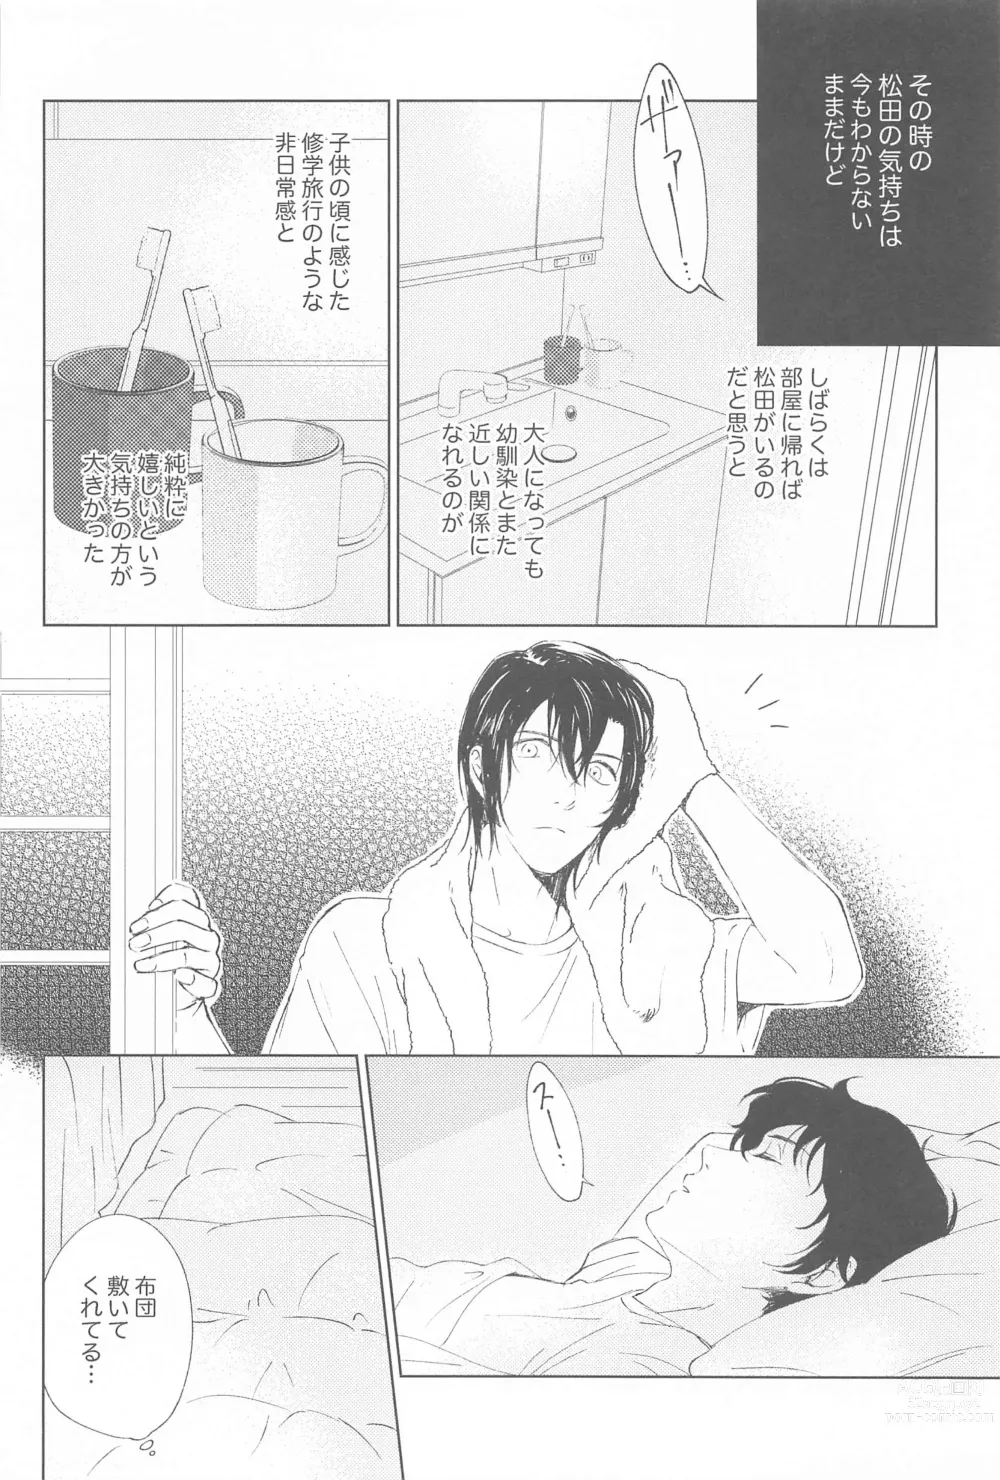 Page 13 of doujinshi ORTHONASAL